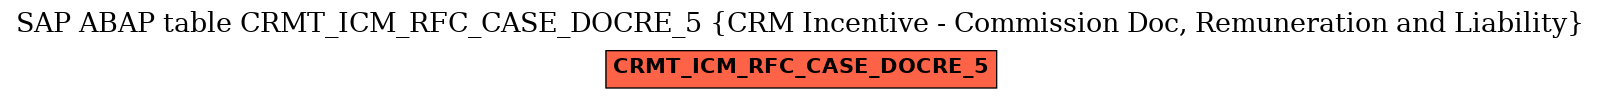 E-R Diagram for table CRMT_ICM_RFC_CASE_DOCRE_5 (CRM Incentive - Commission Doc, Remuneration and Liability)